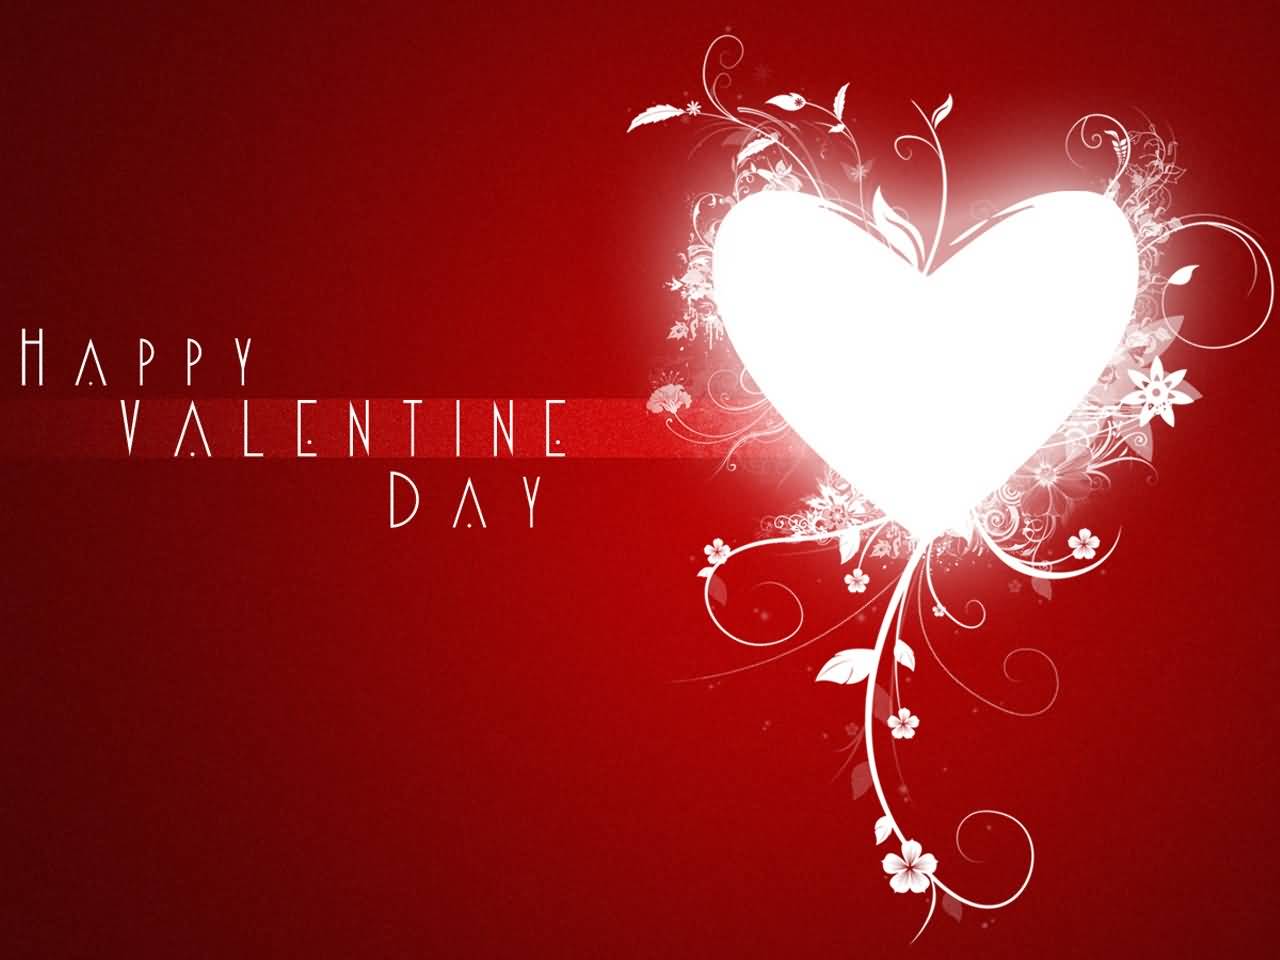 Happy Valentine’s Day Glowing Heart HD Wallpaper